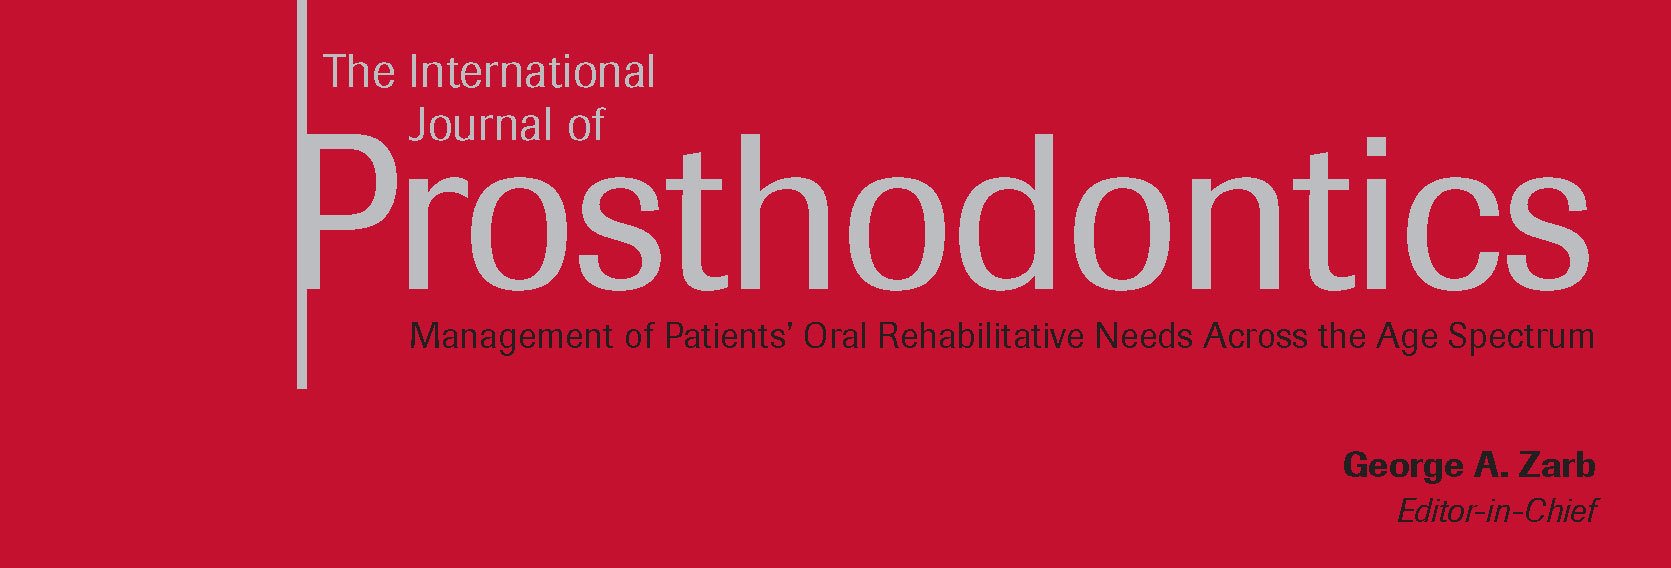 International journal of prosthodontics online submission